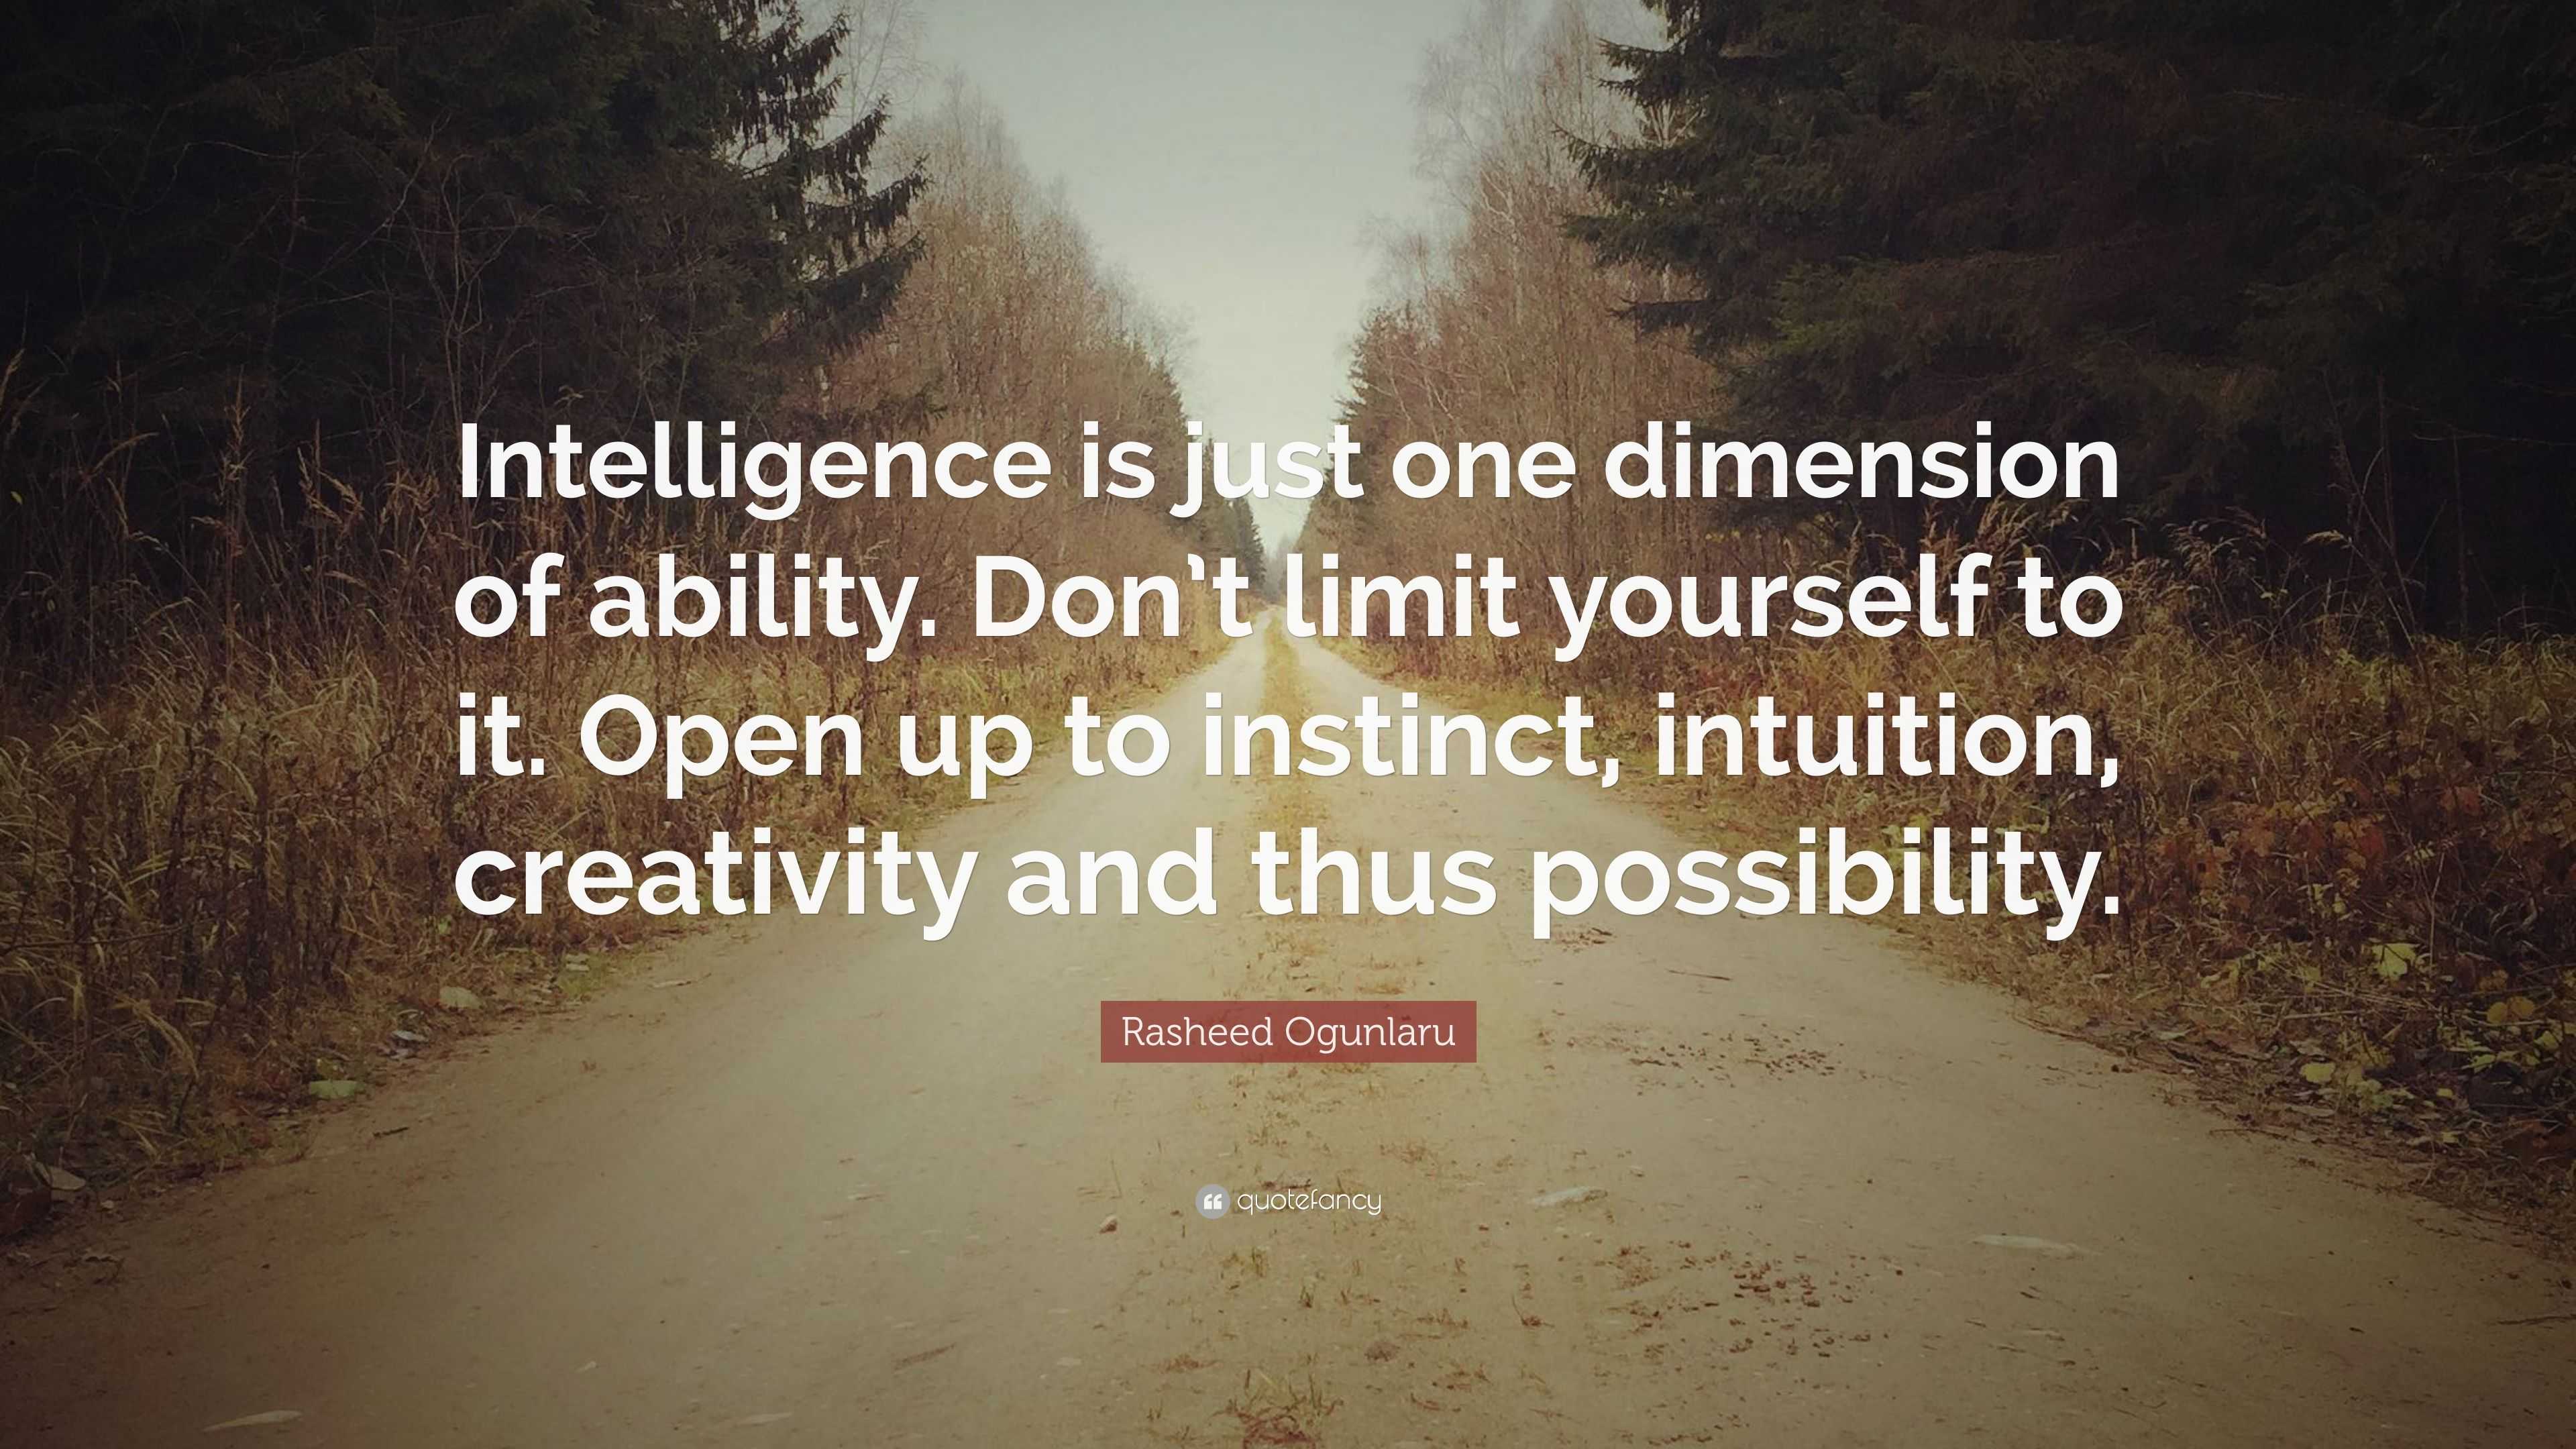 Rasheed Ogunlaru Quote: “Intelligence is just one dimension of ability ...